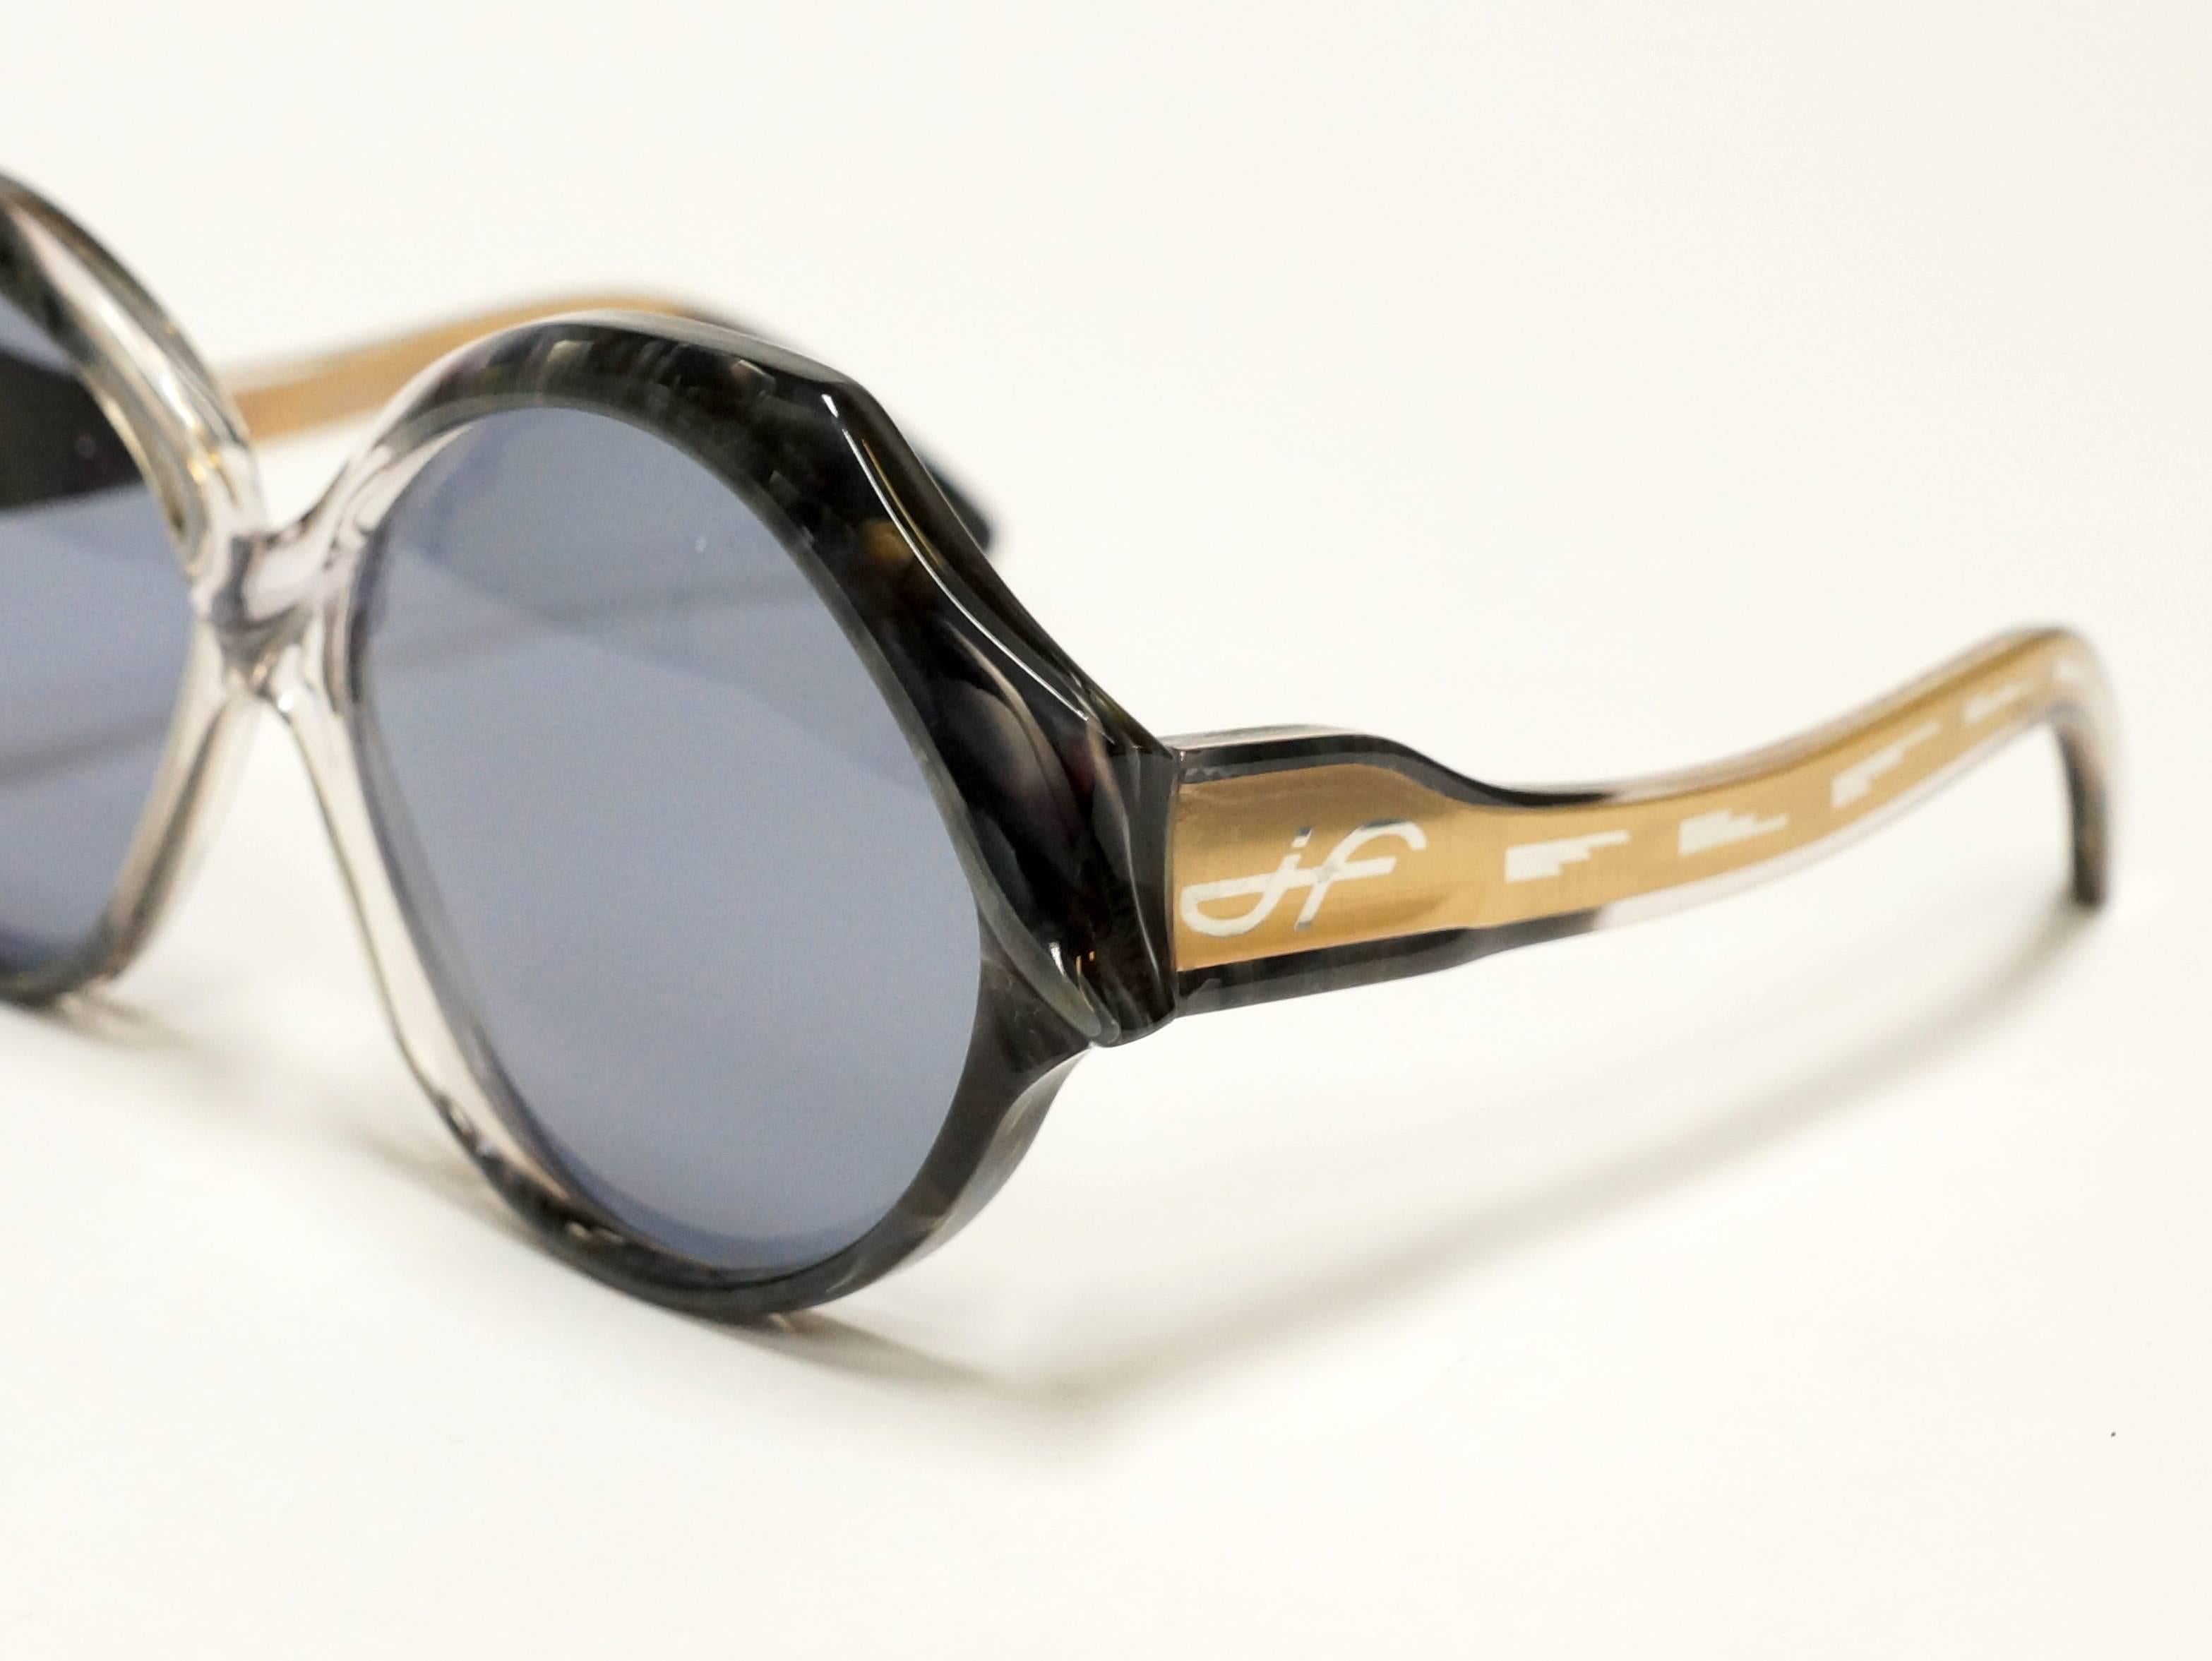 70s French Vintage Sunglasses by Jacques Fath - model Esterel/7  For Sale 5